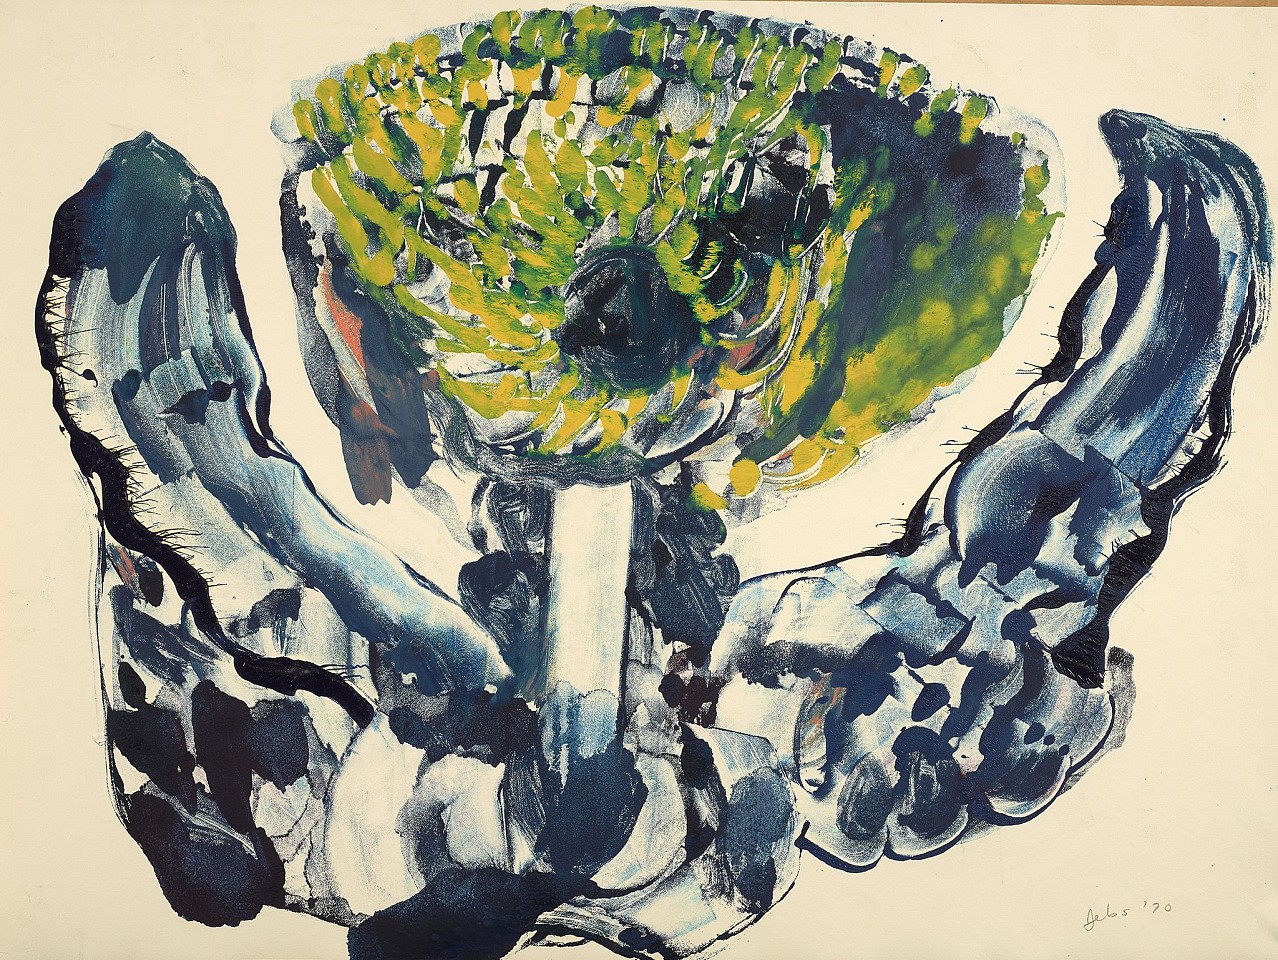 Jacob Schwartz, Flowers, 1970
Monoprint on paper, 18 3/4 x 25 in. (47.6 x 63.5 cm)
JSCH-00001